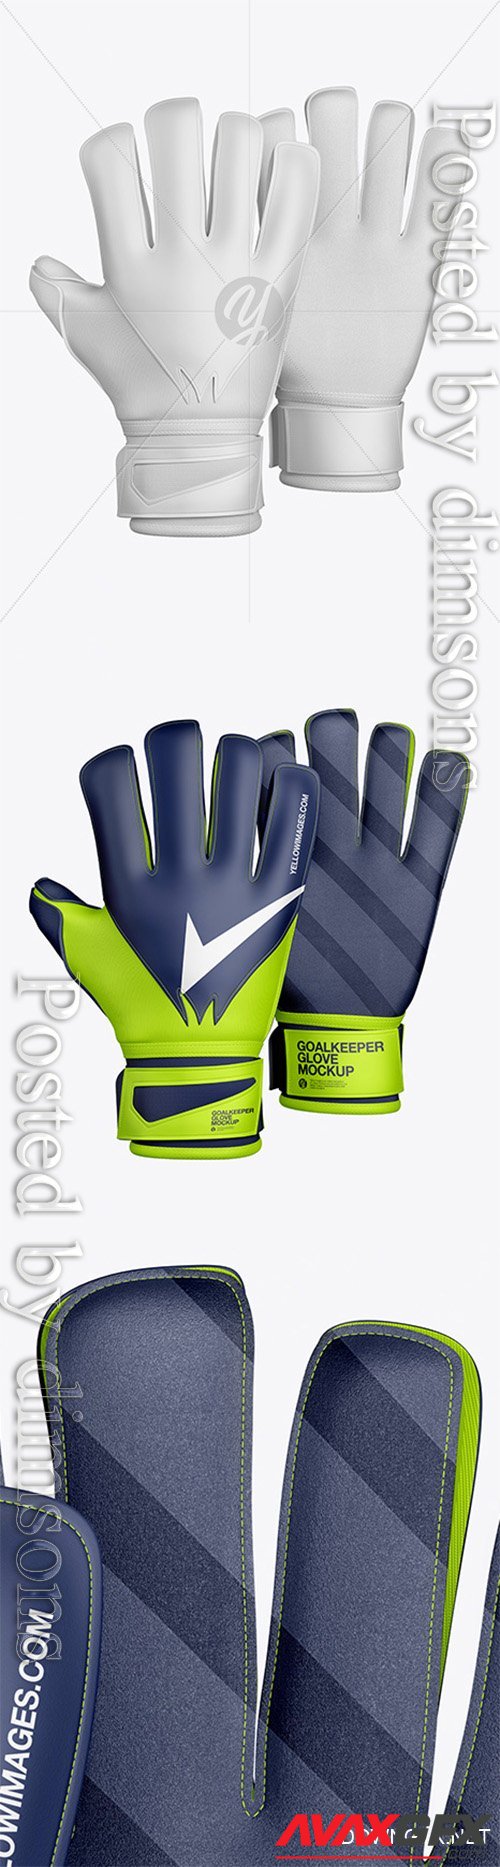 Goalkeeper Gloves Mockup 39972 Layered TIF